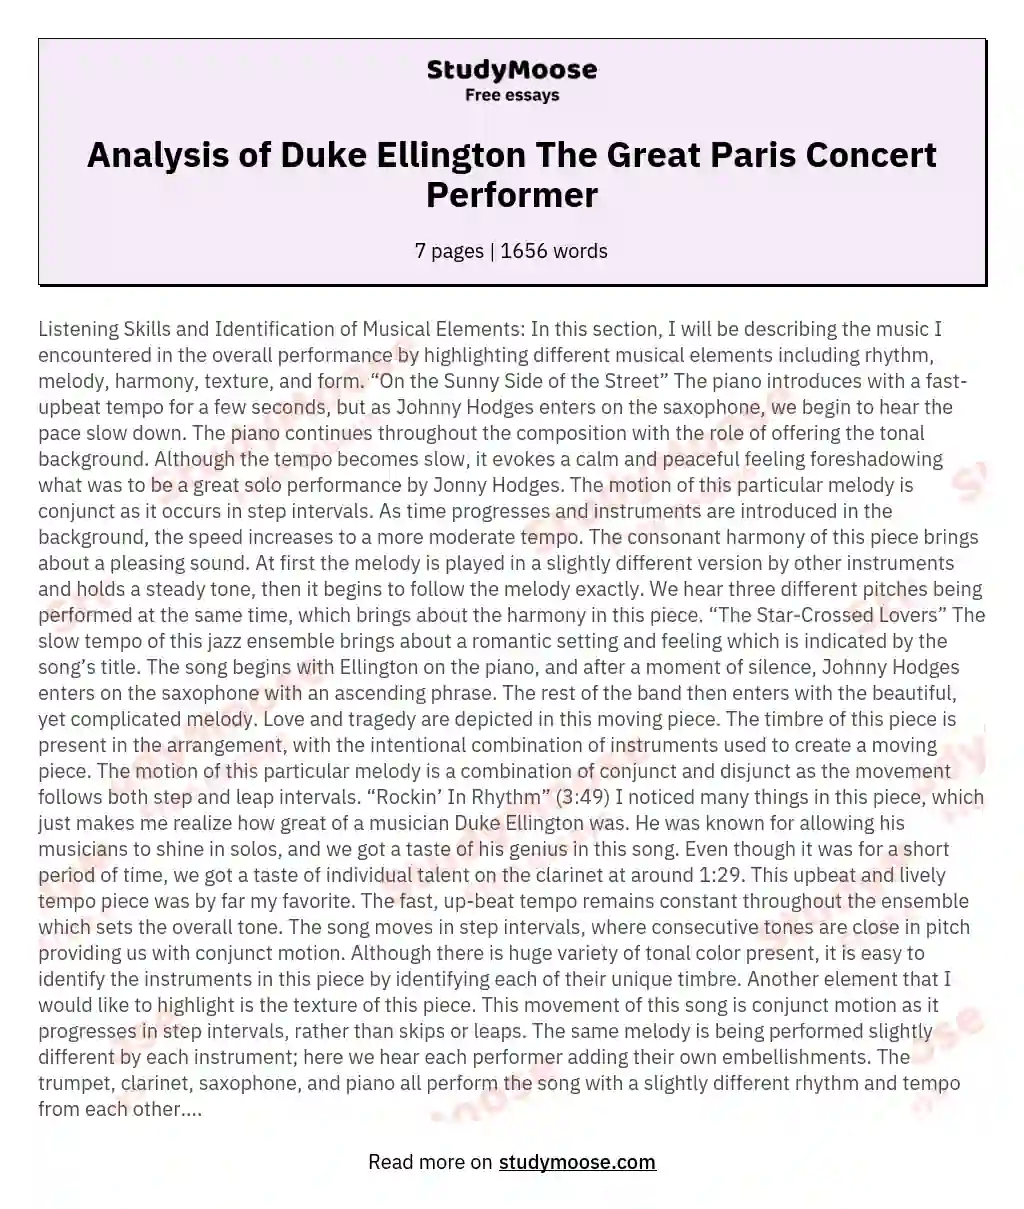 Analysis of Duke Ellington The Great Paris Concert Performer essay